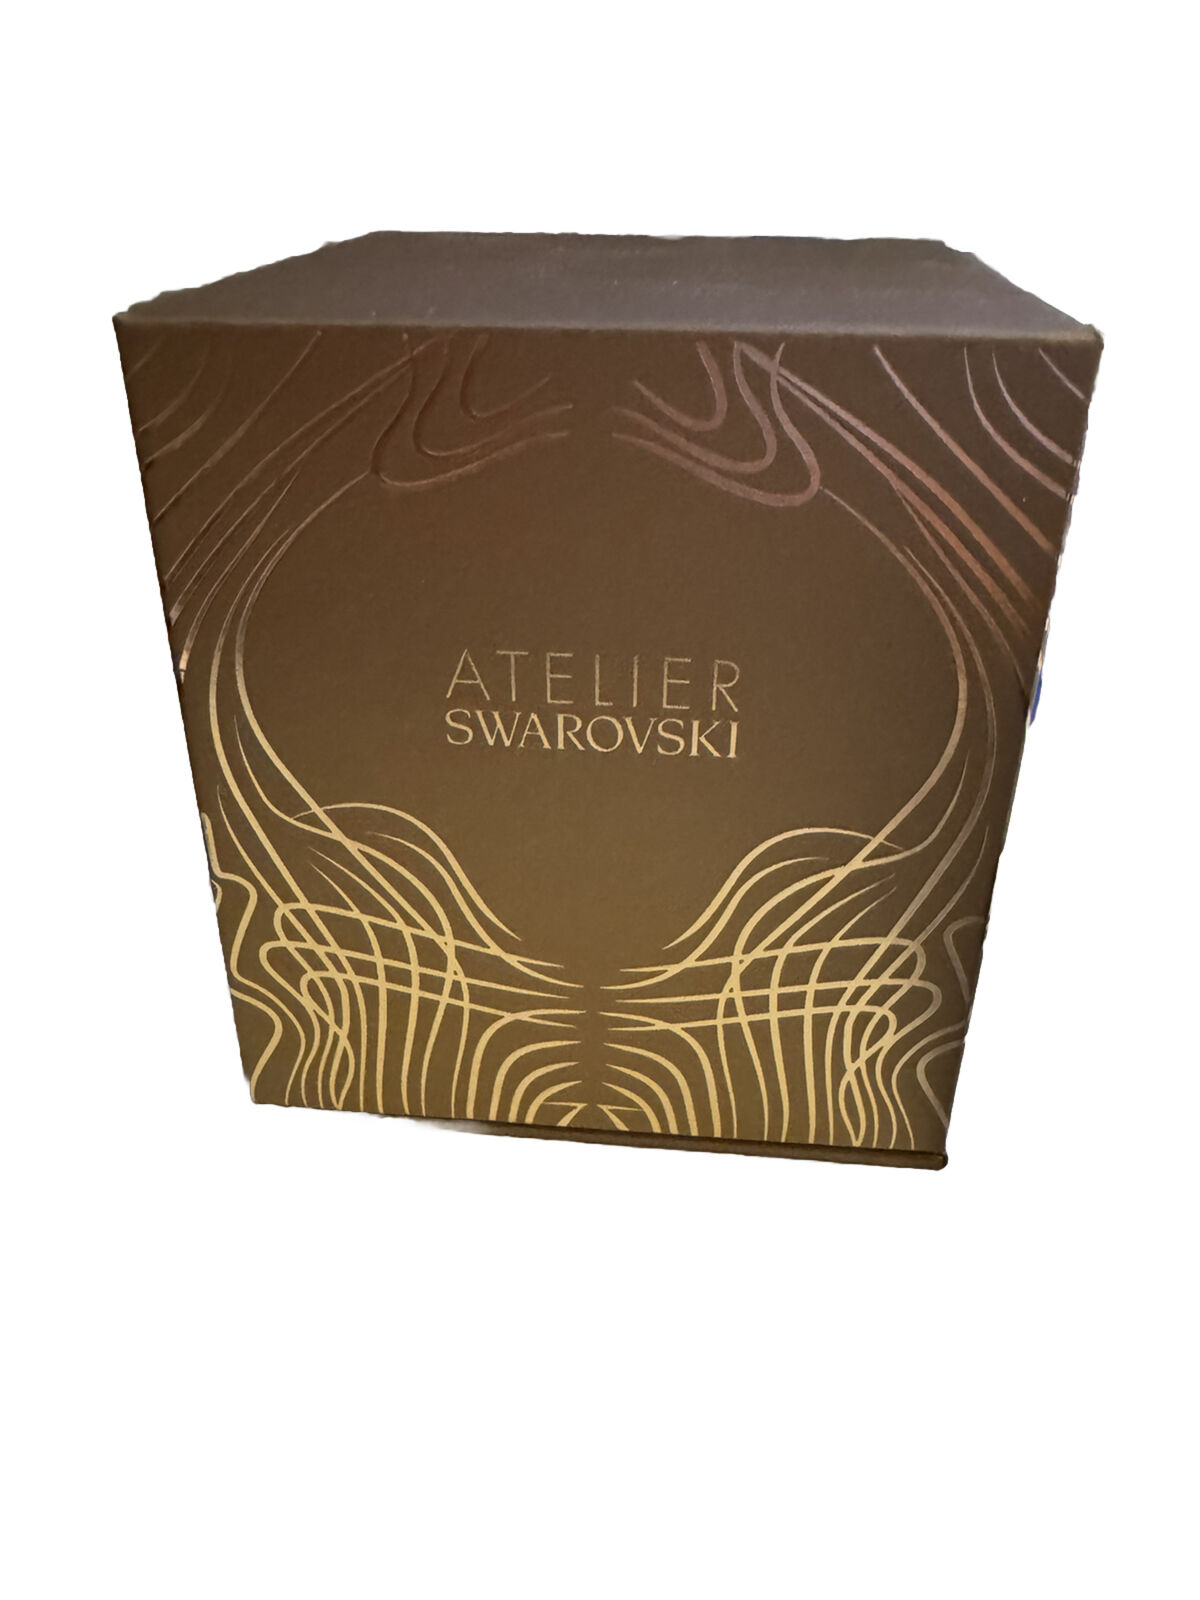 NIB Atelier Swarovski Candle Vanilla Gold Limited Edition